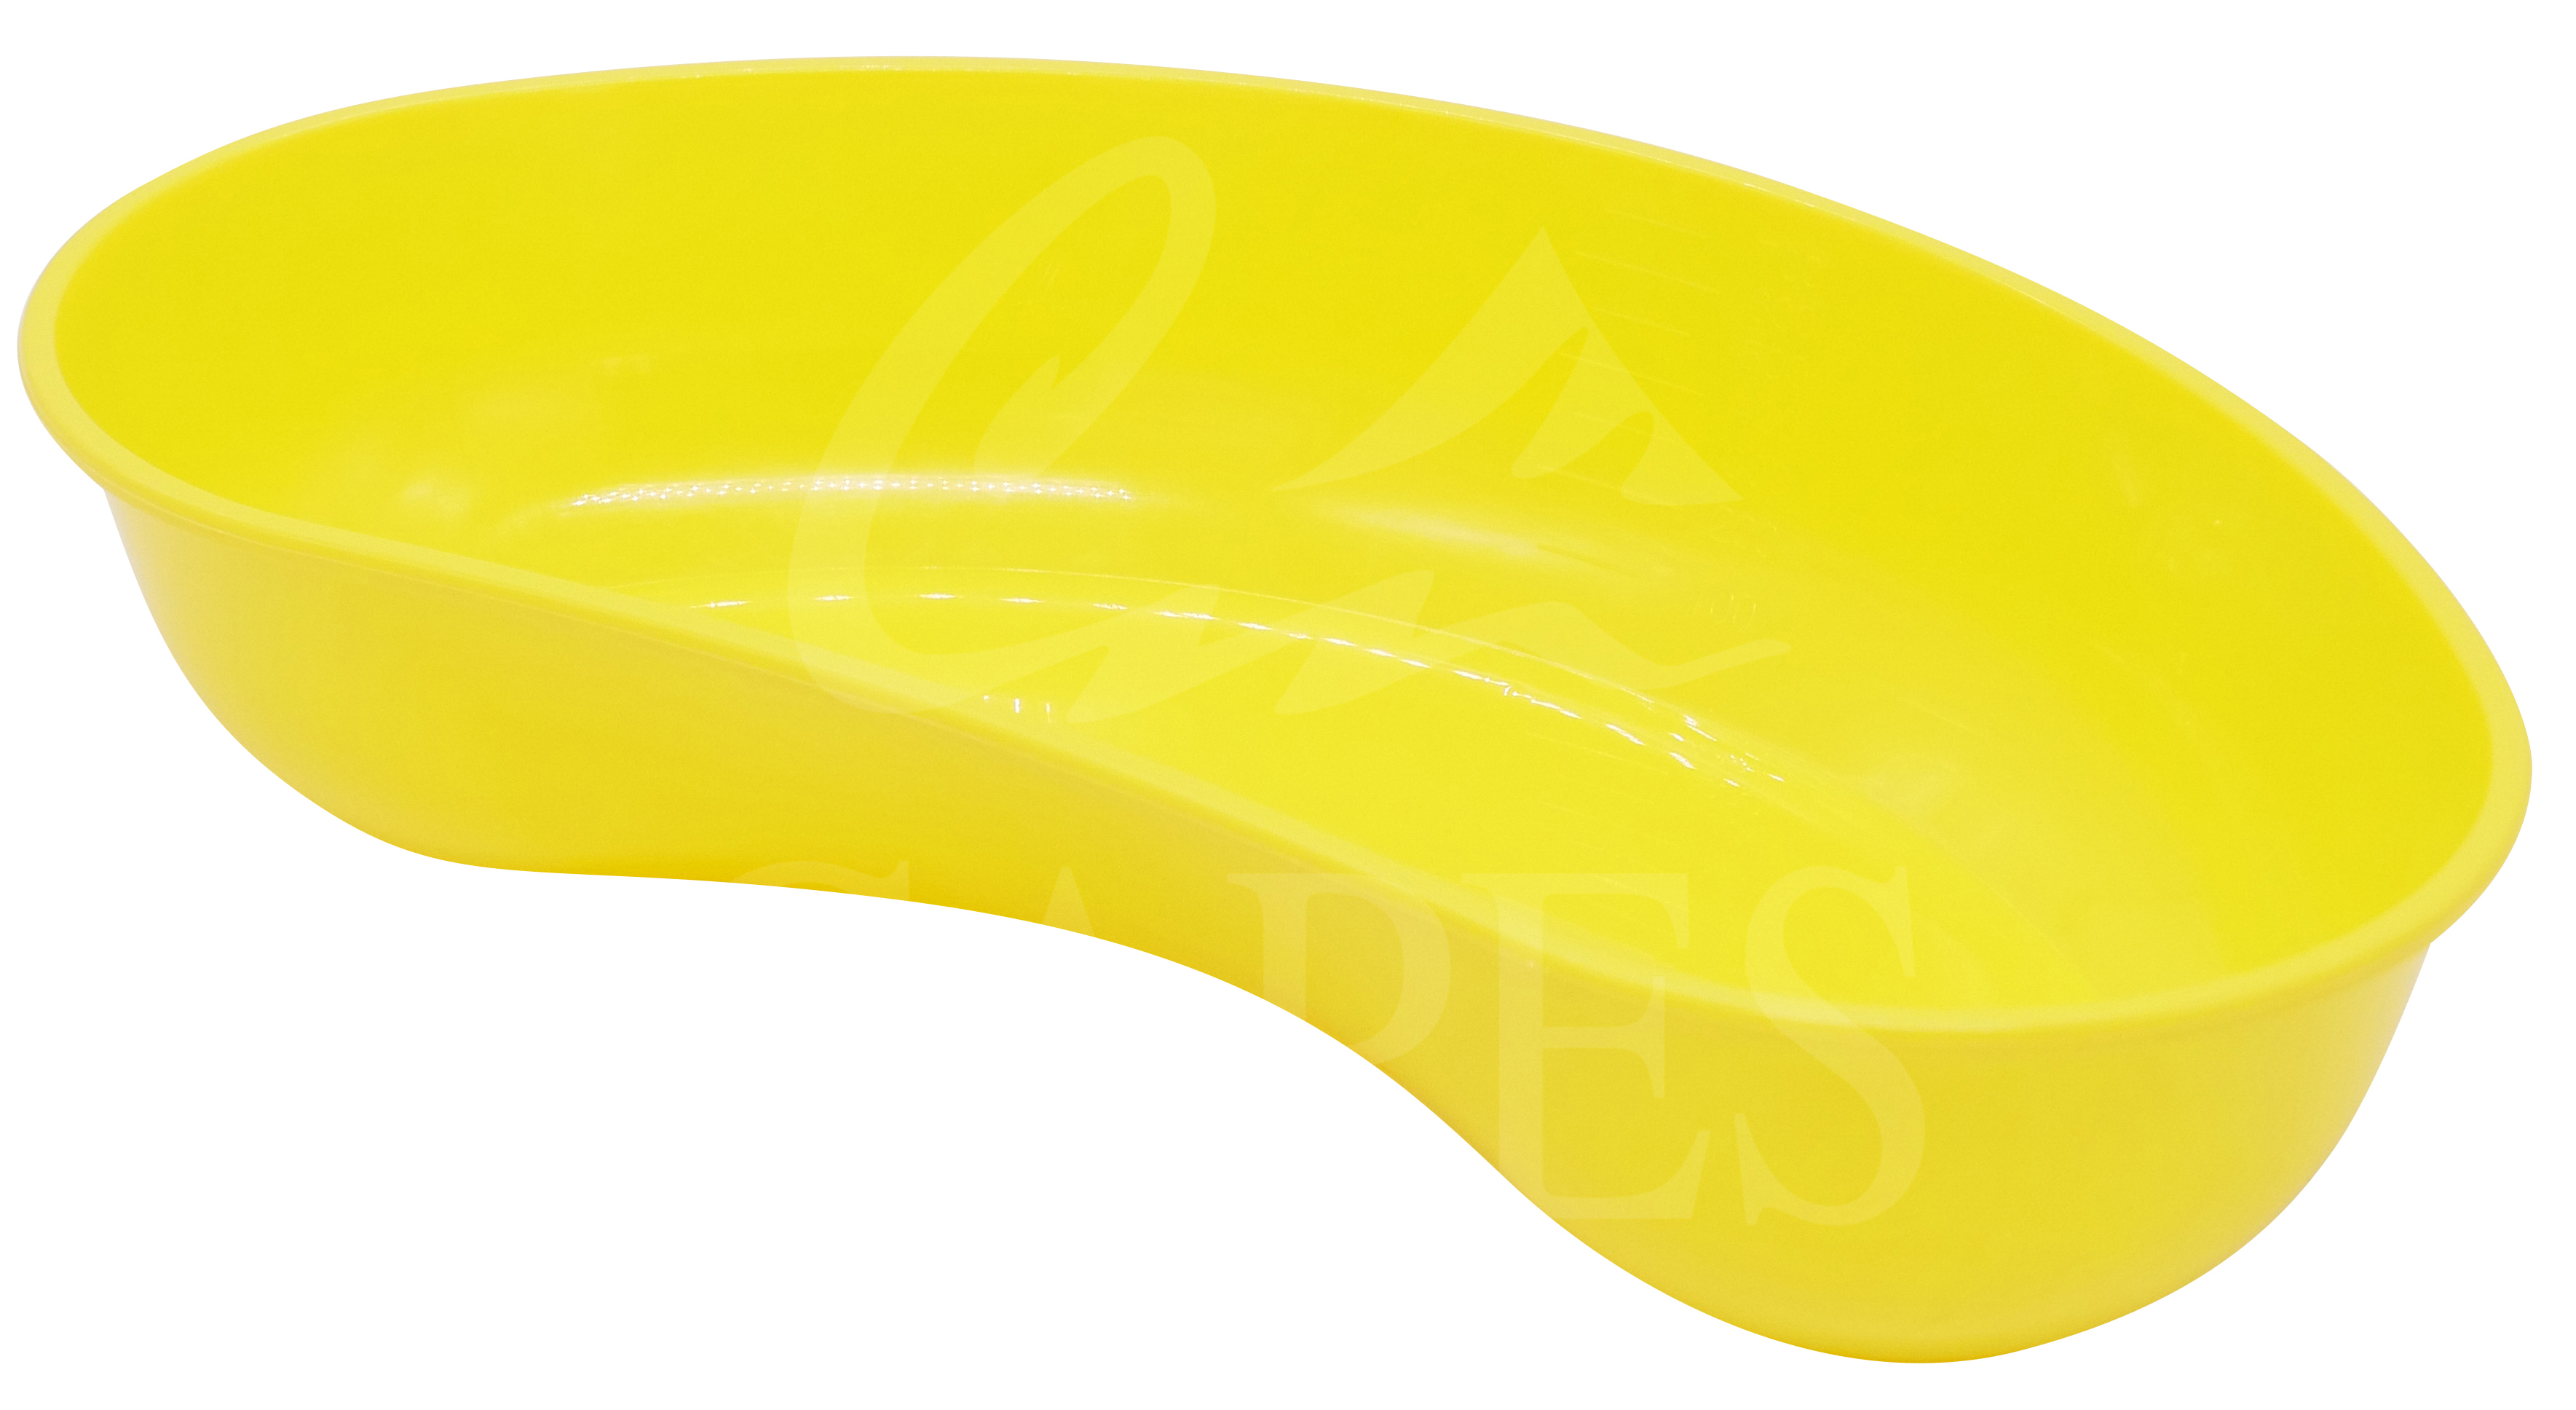 Kidney Dish Yellow Non Sterile 700ml image 0